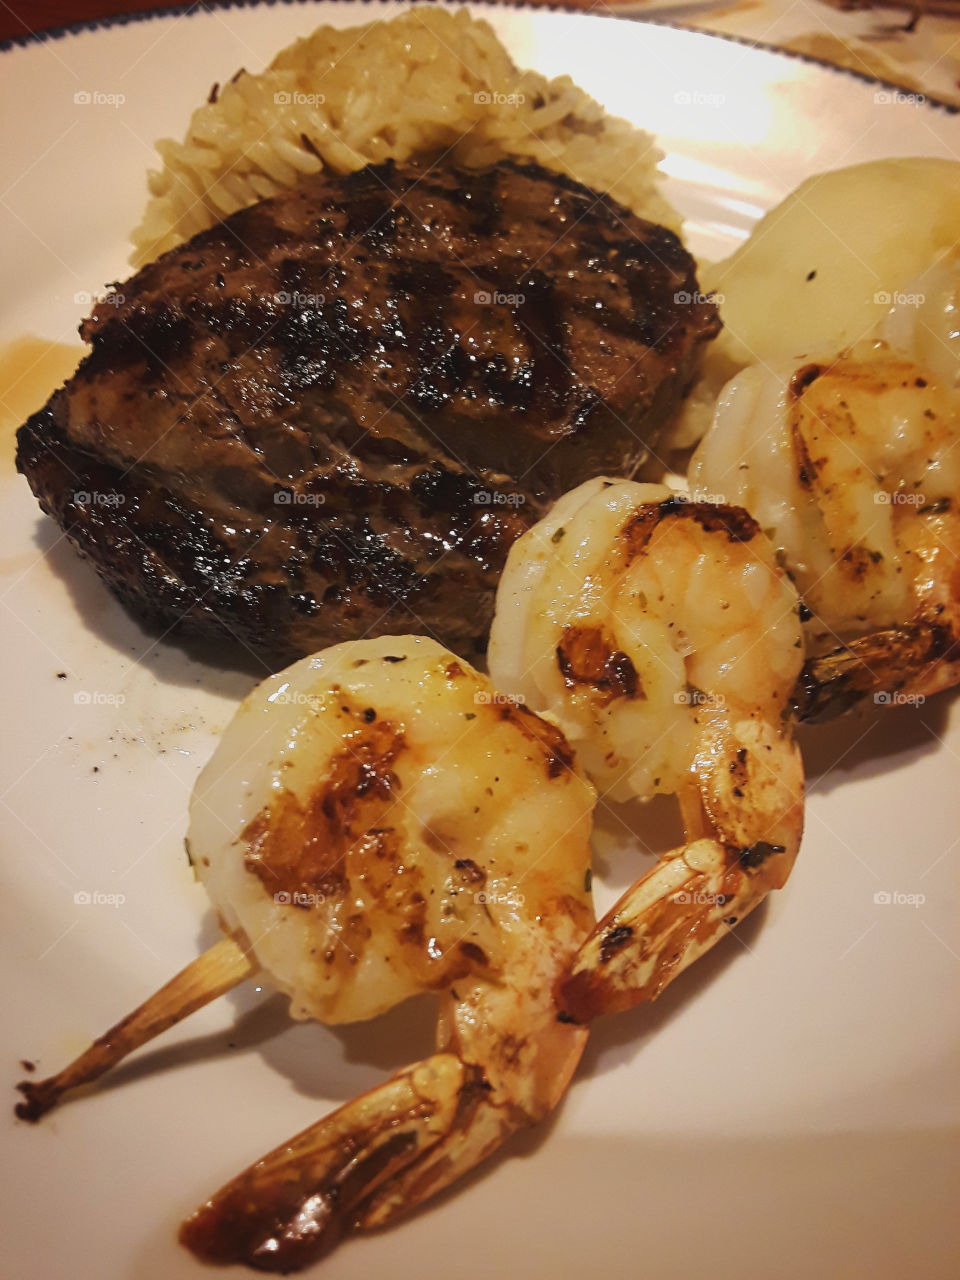 Steak and Shrimp Cuisine